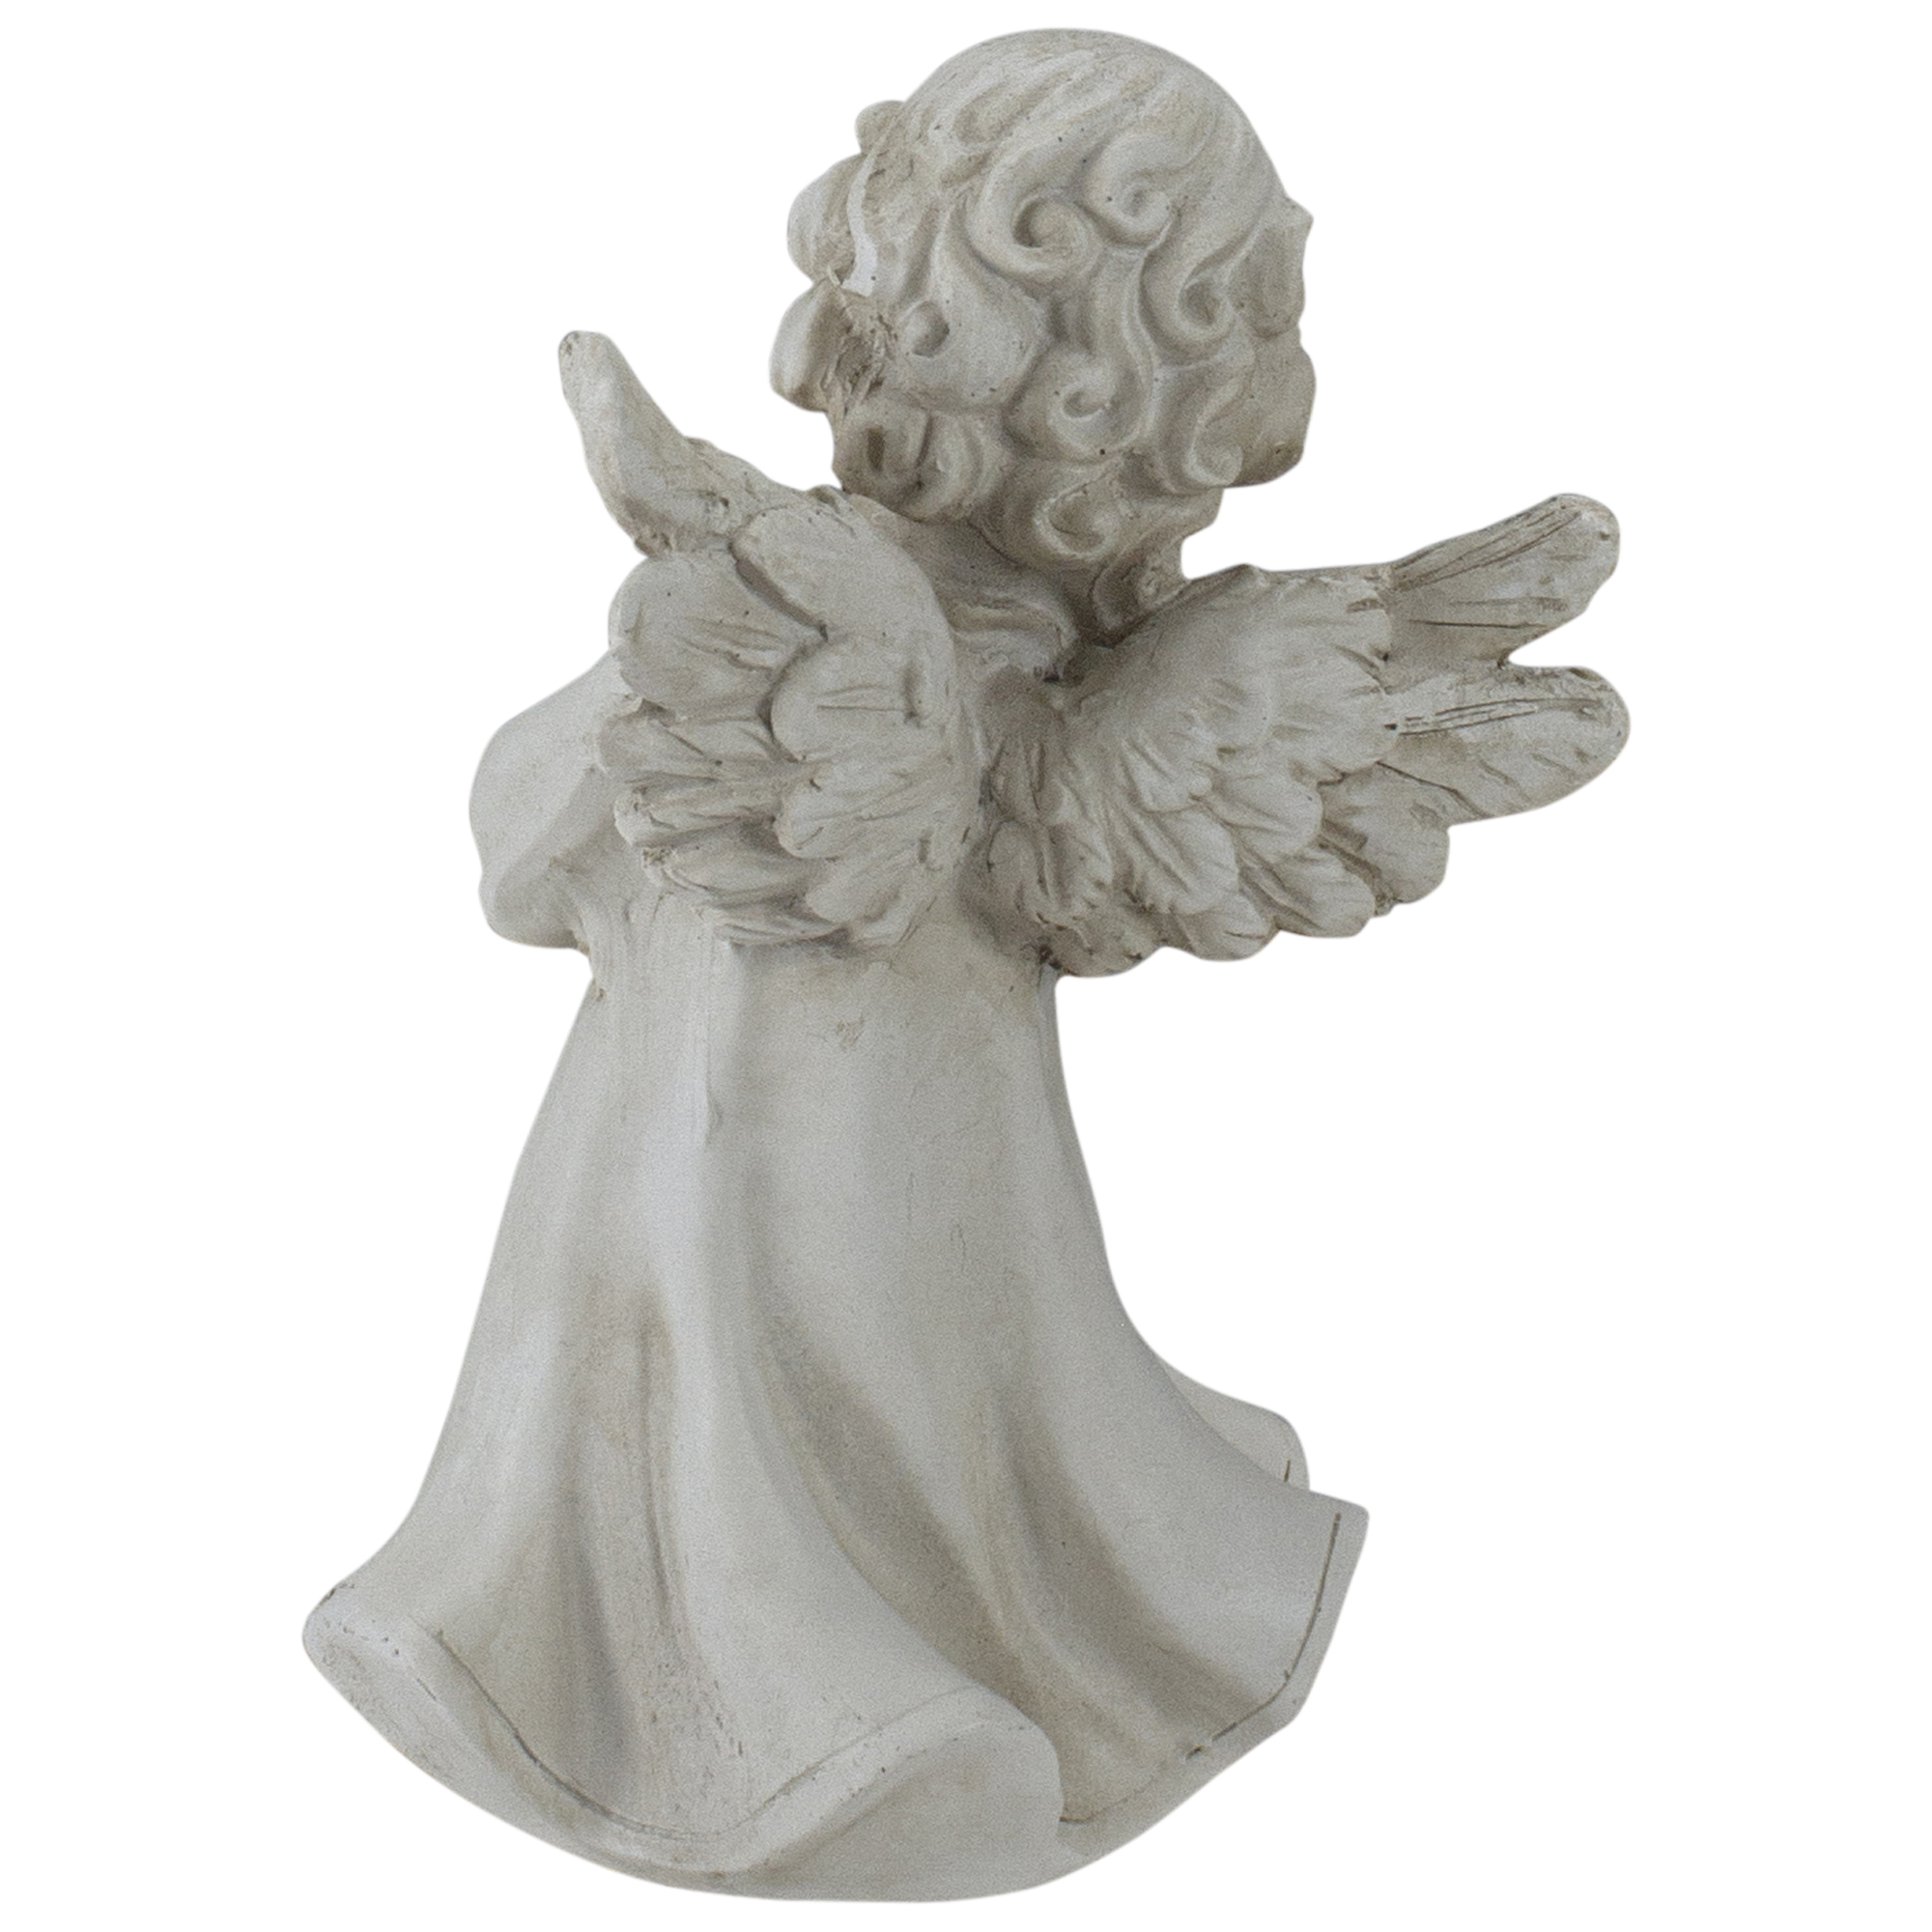 Northlight 6.5" Angel Girl Holding Flower Outdoor Garden Statue - image 4 of 5